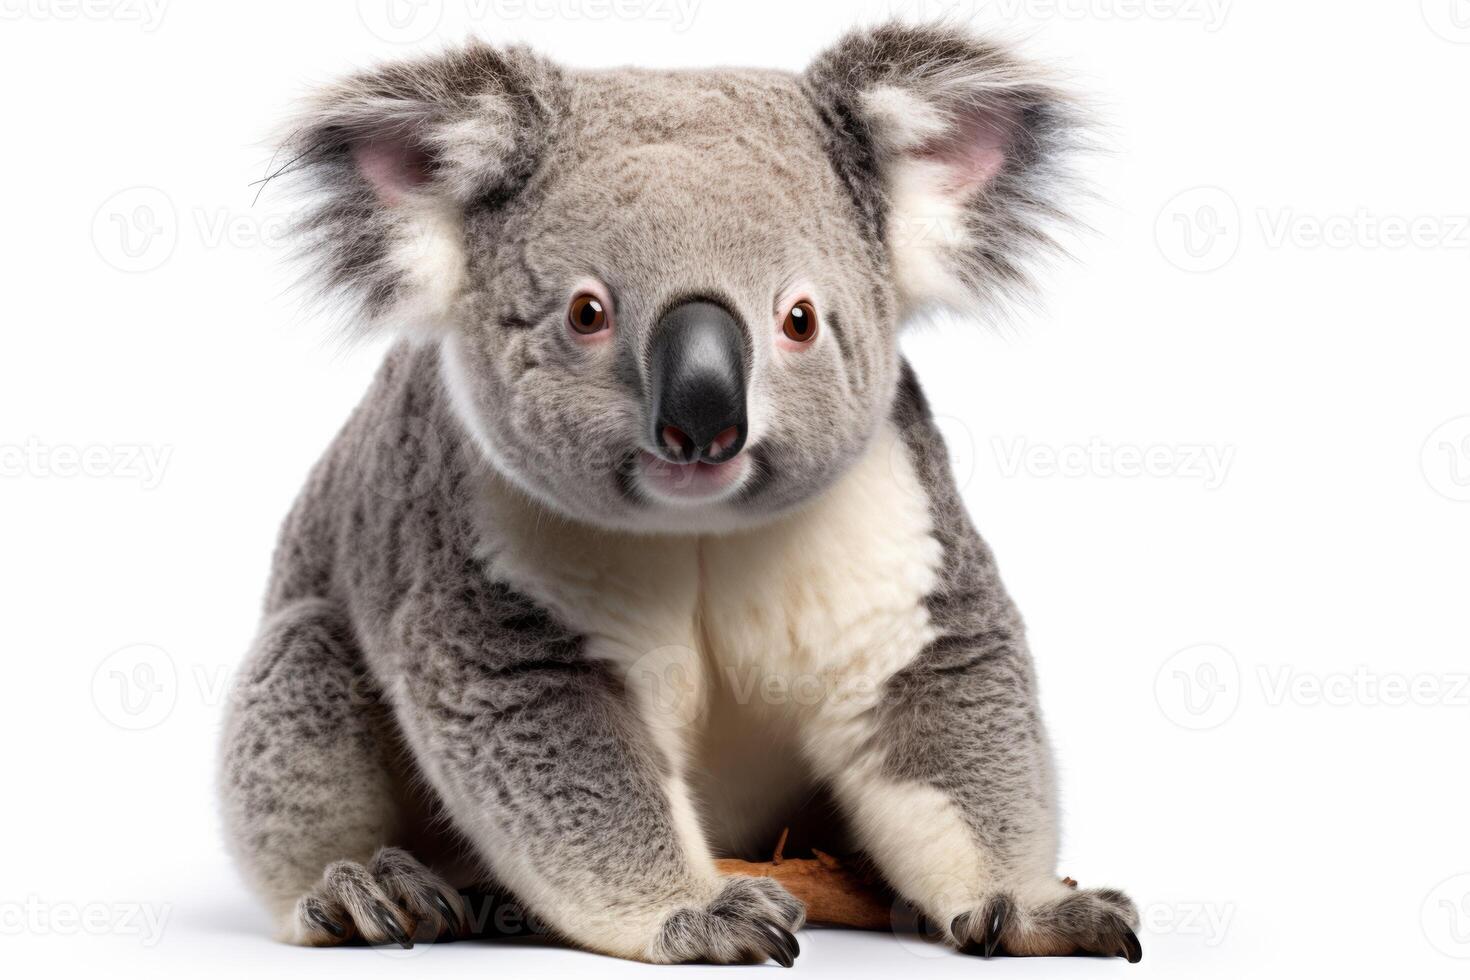 ai gegenereerd koala beer clip art foto